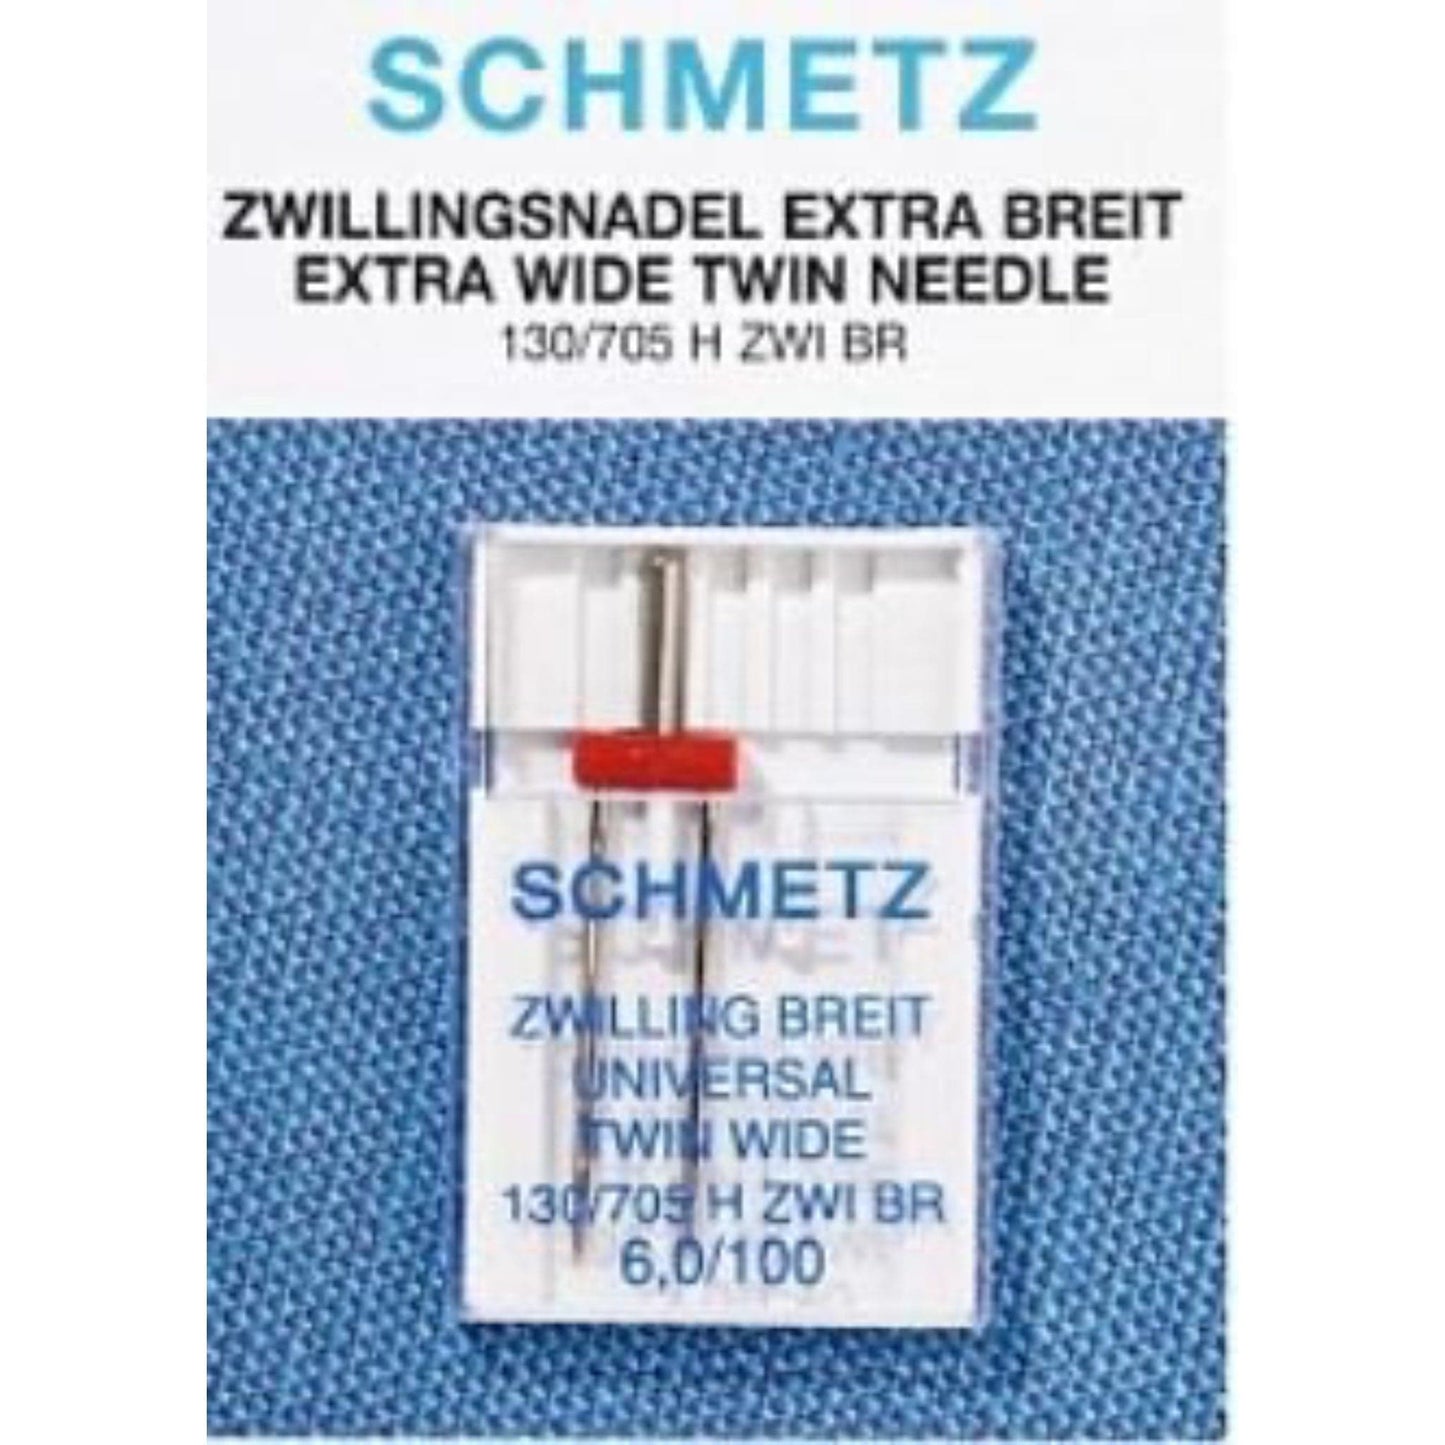 Schmetz Sewing Machine Needle Universal Twin Wide 6mm Size 100/16